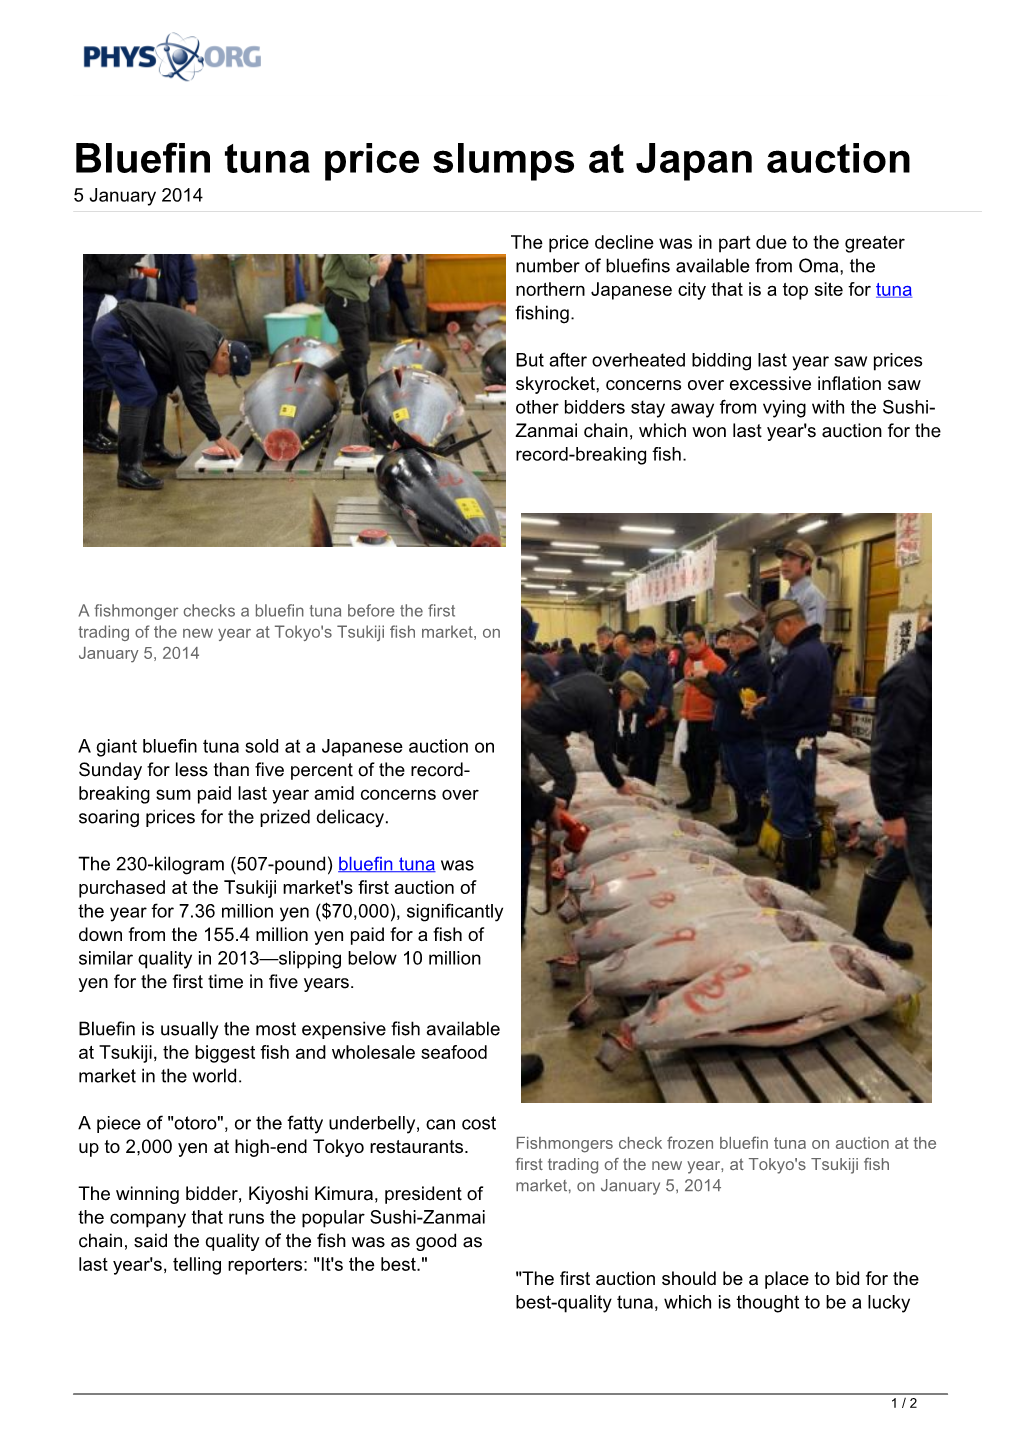 Bluefin Tuna Price Slumps at Japan Auction 5 January 2014